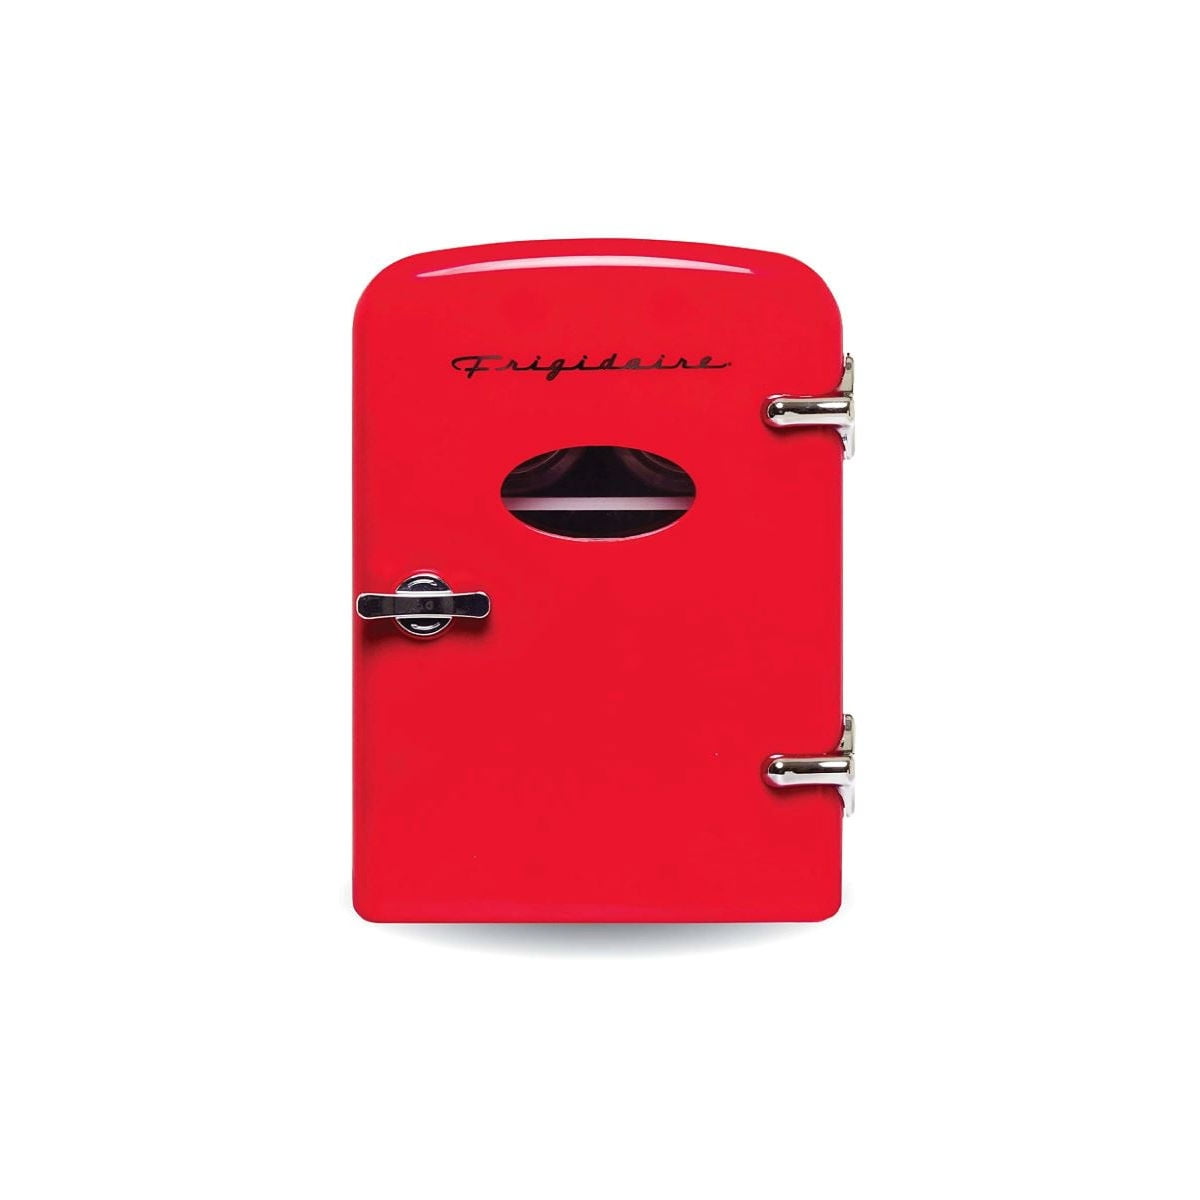 Frigidaire 6-can Mini Retro Beverage Fridge Red Efmis121-red for sale online 